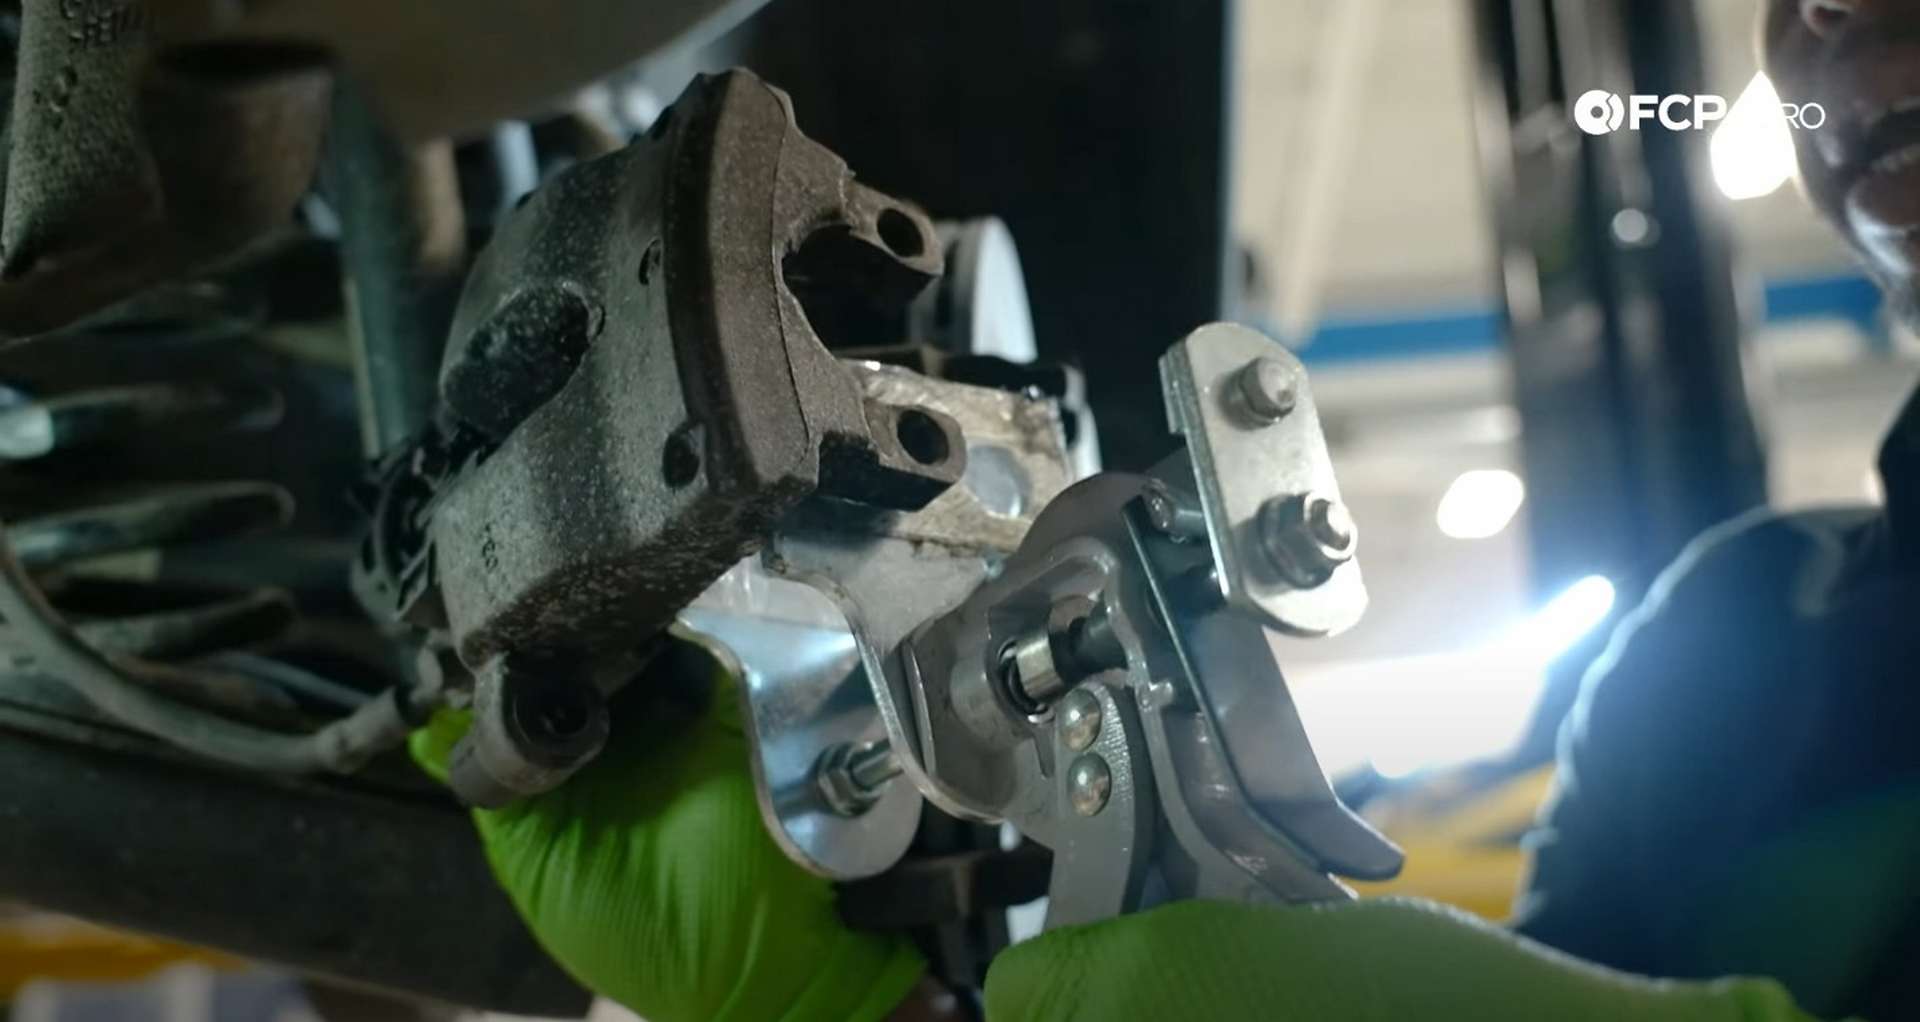 DIY Mercedes W205 Rear Brake Service compressing the piston